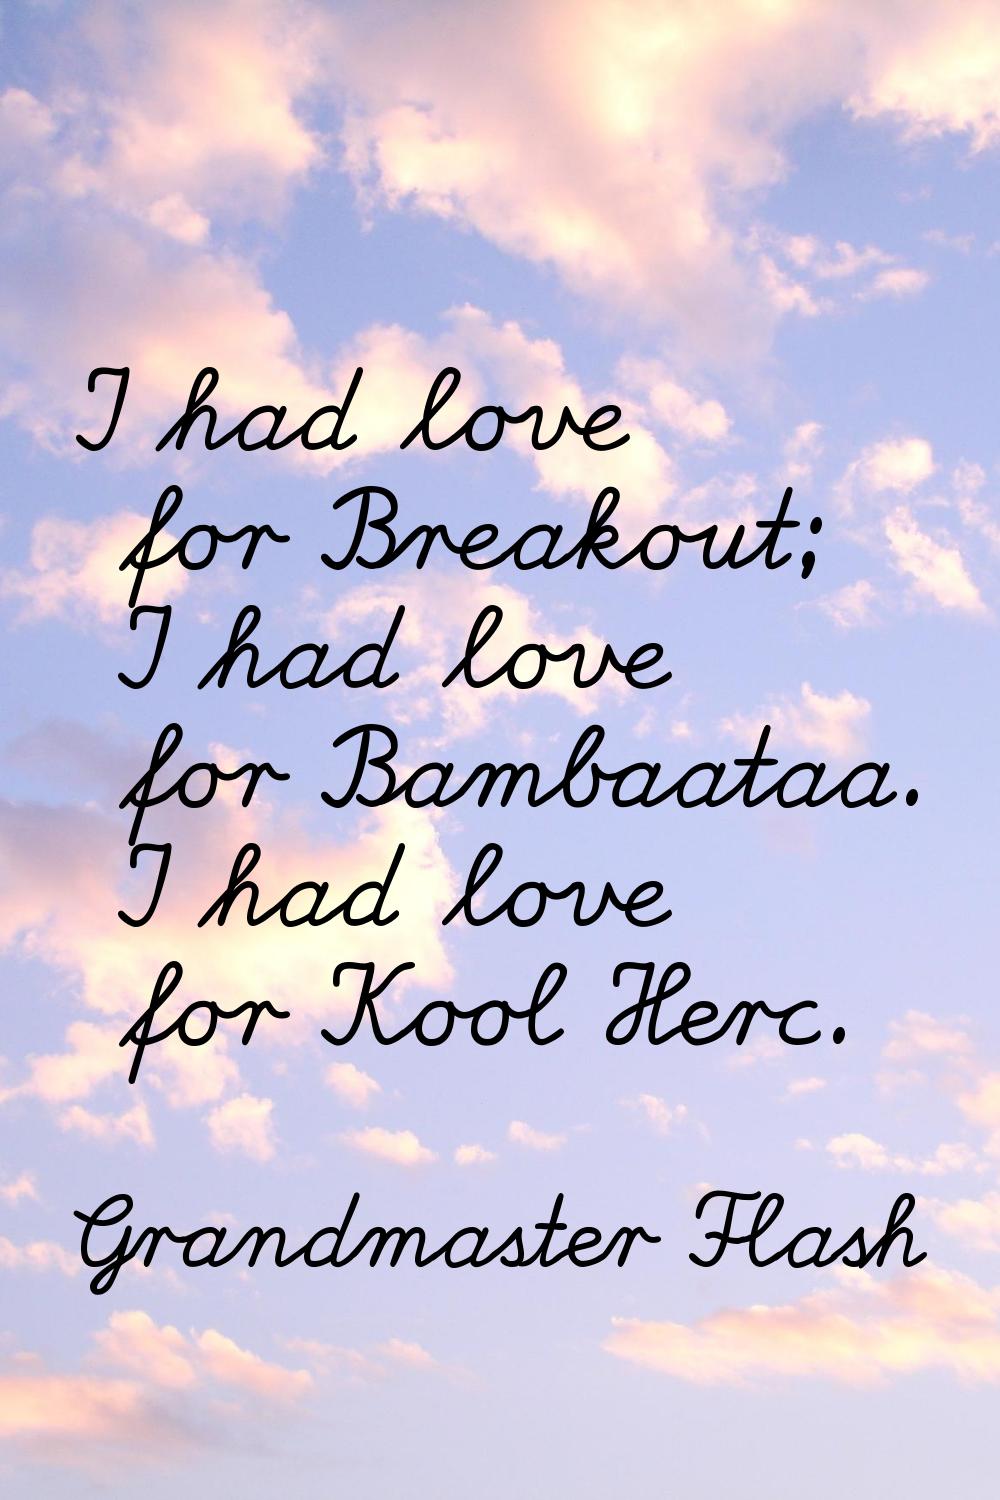 I had love for Breakout; I had love for Bambaataa. I had love for Kool Herc.